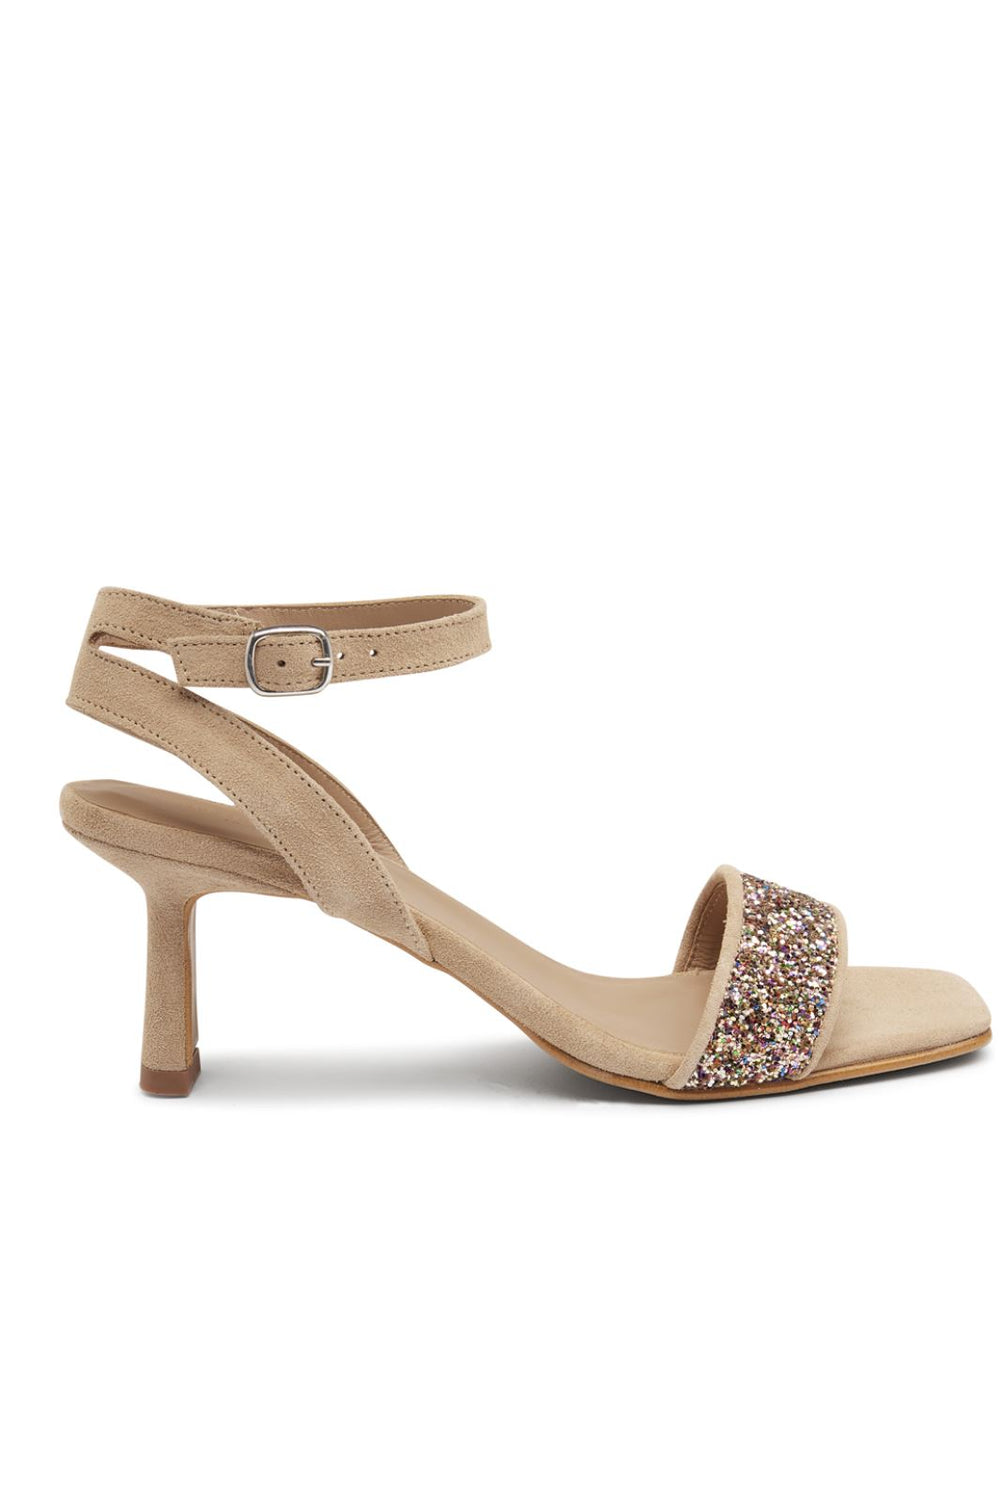 Angulus - Sandals- Block heels - 2488/1149 Multi Glitter/Sand Stiletter 